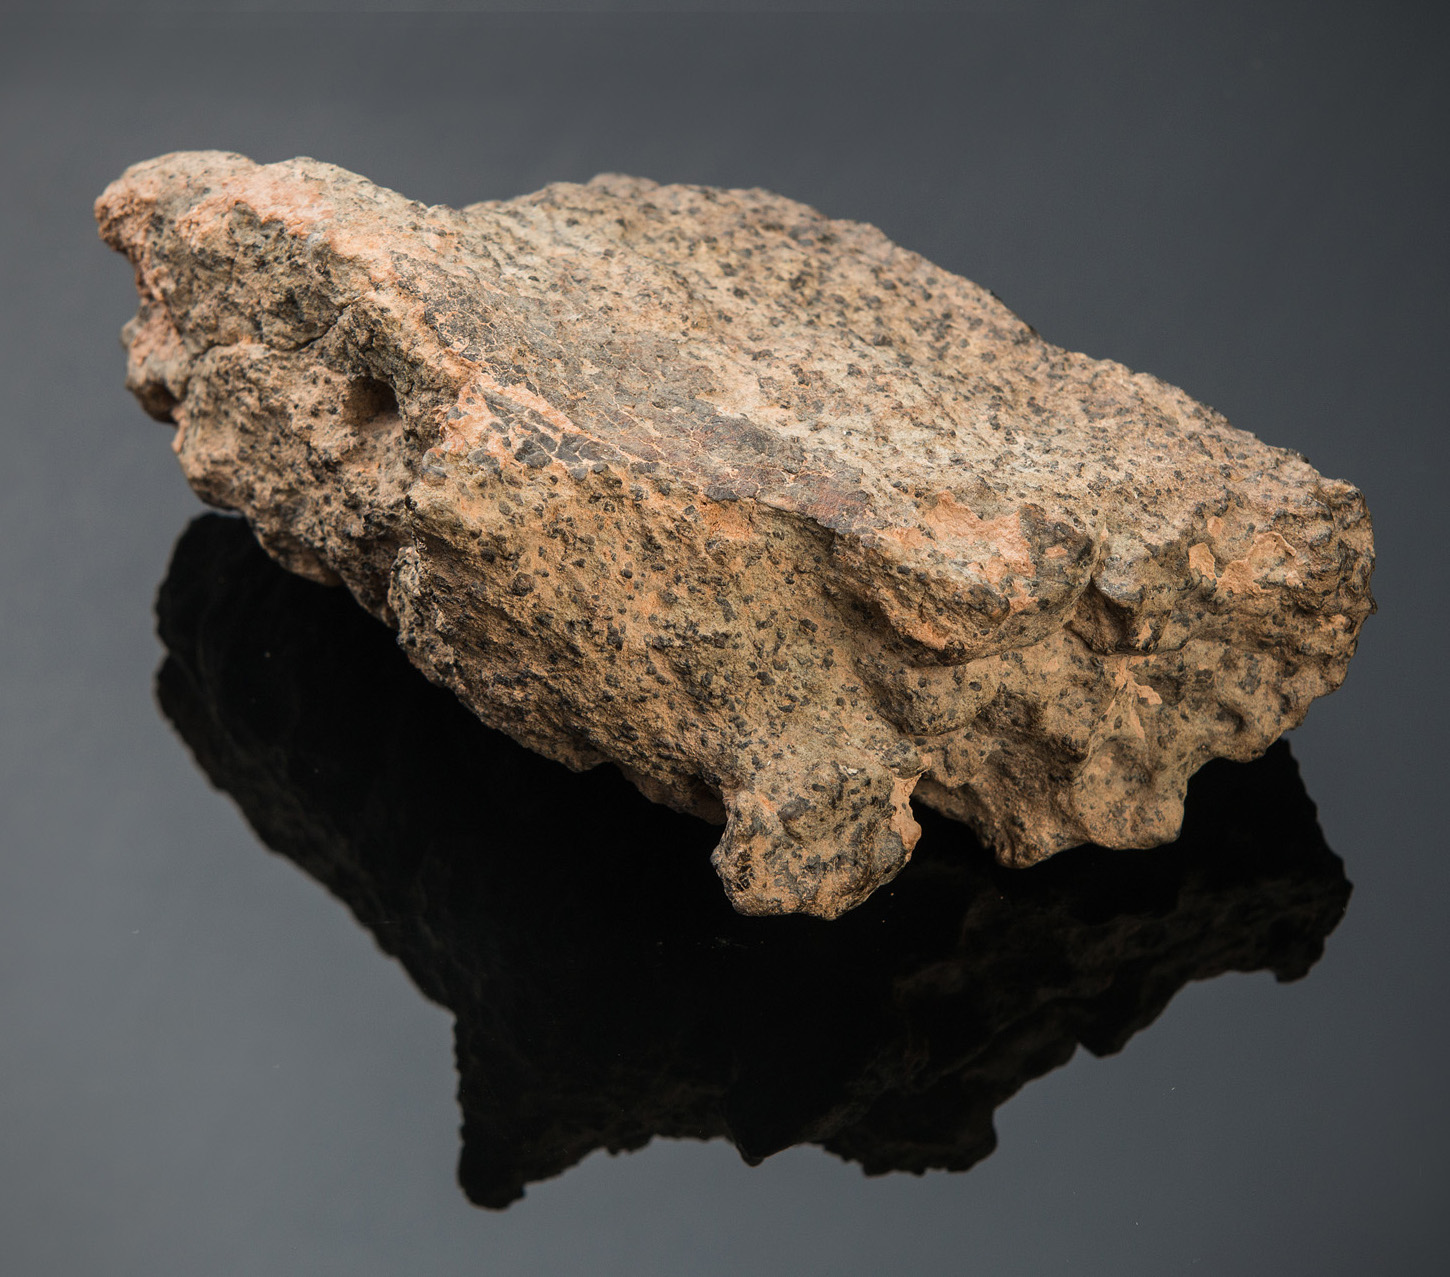 La meteorite marziana del Museo di Scienze Planetarie esposta al Milan Games Week dal 25 al 27 novembre